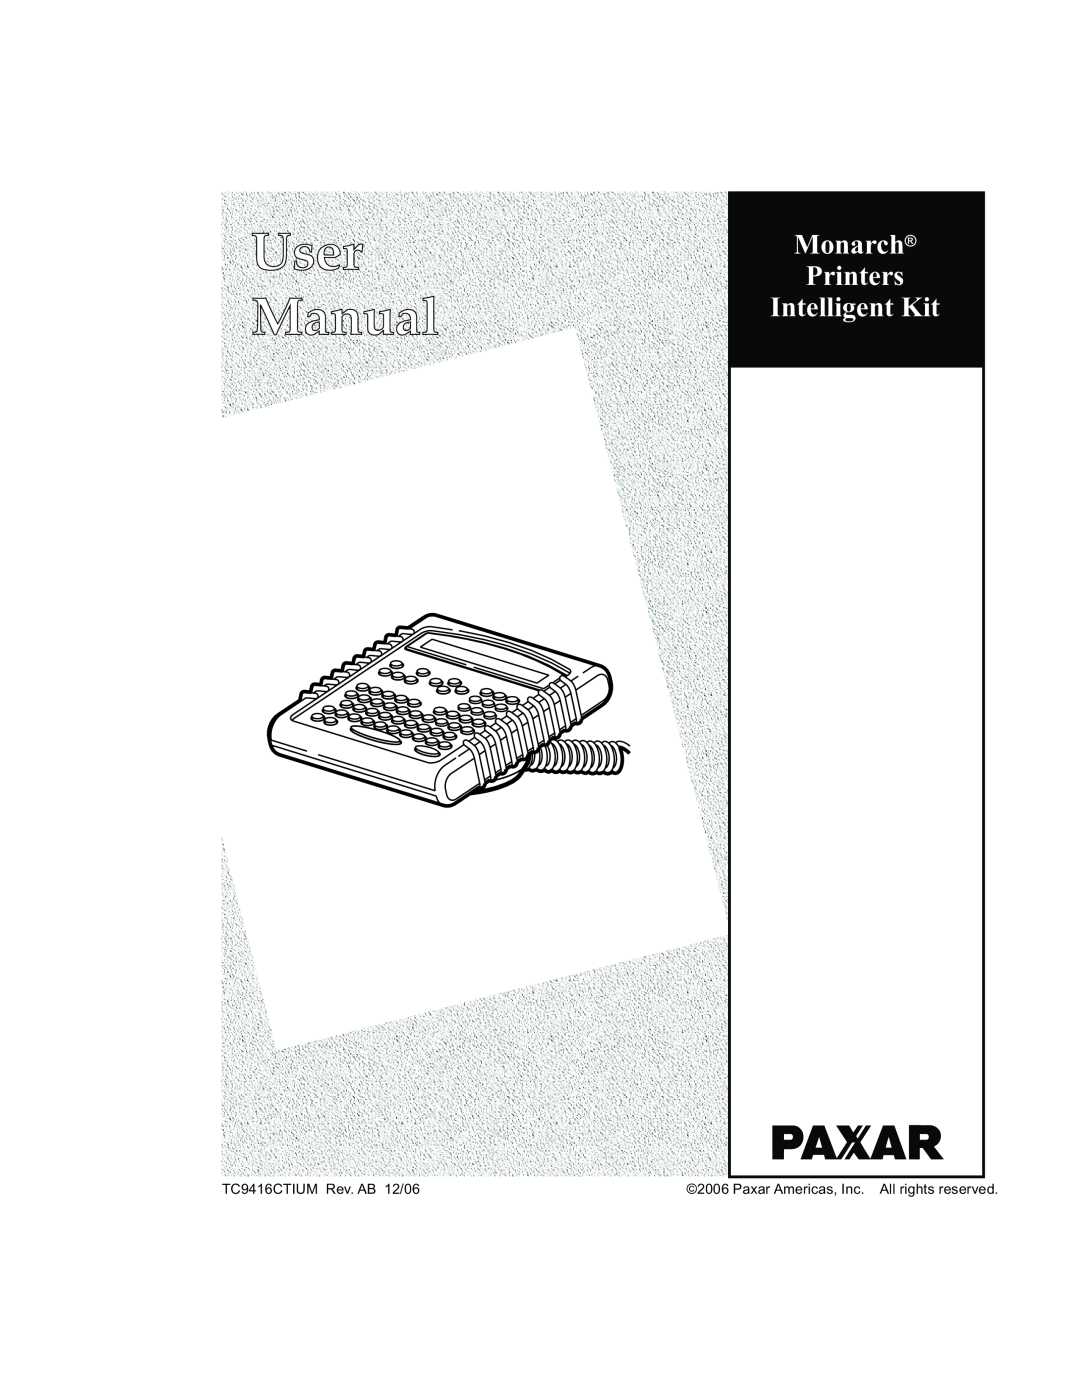 Paxar Model 9416 manual User Manual, Monarch Printers Intelligent Kit, TC9416CTIUM Rev. AB 12/06 